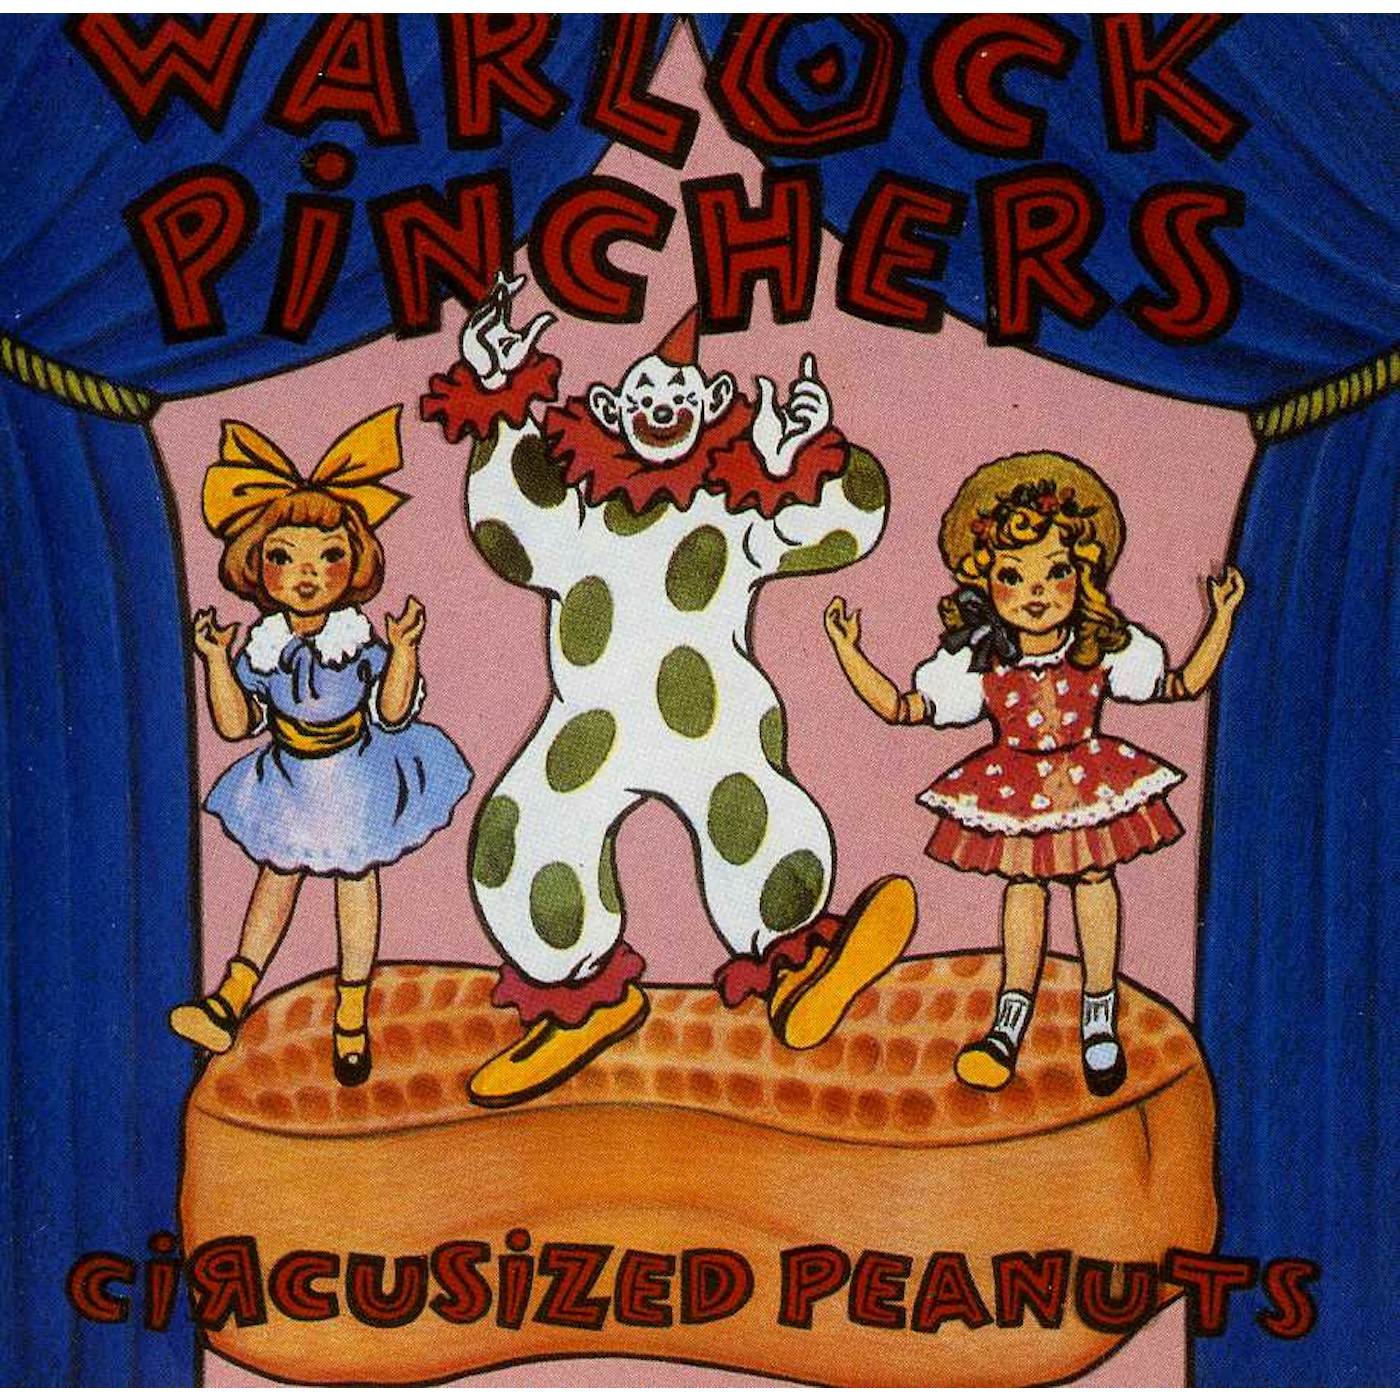 Warlock Pinchers CIRCUSIZED PEANUTS CD